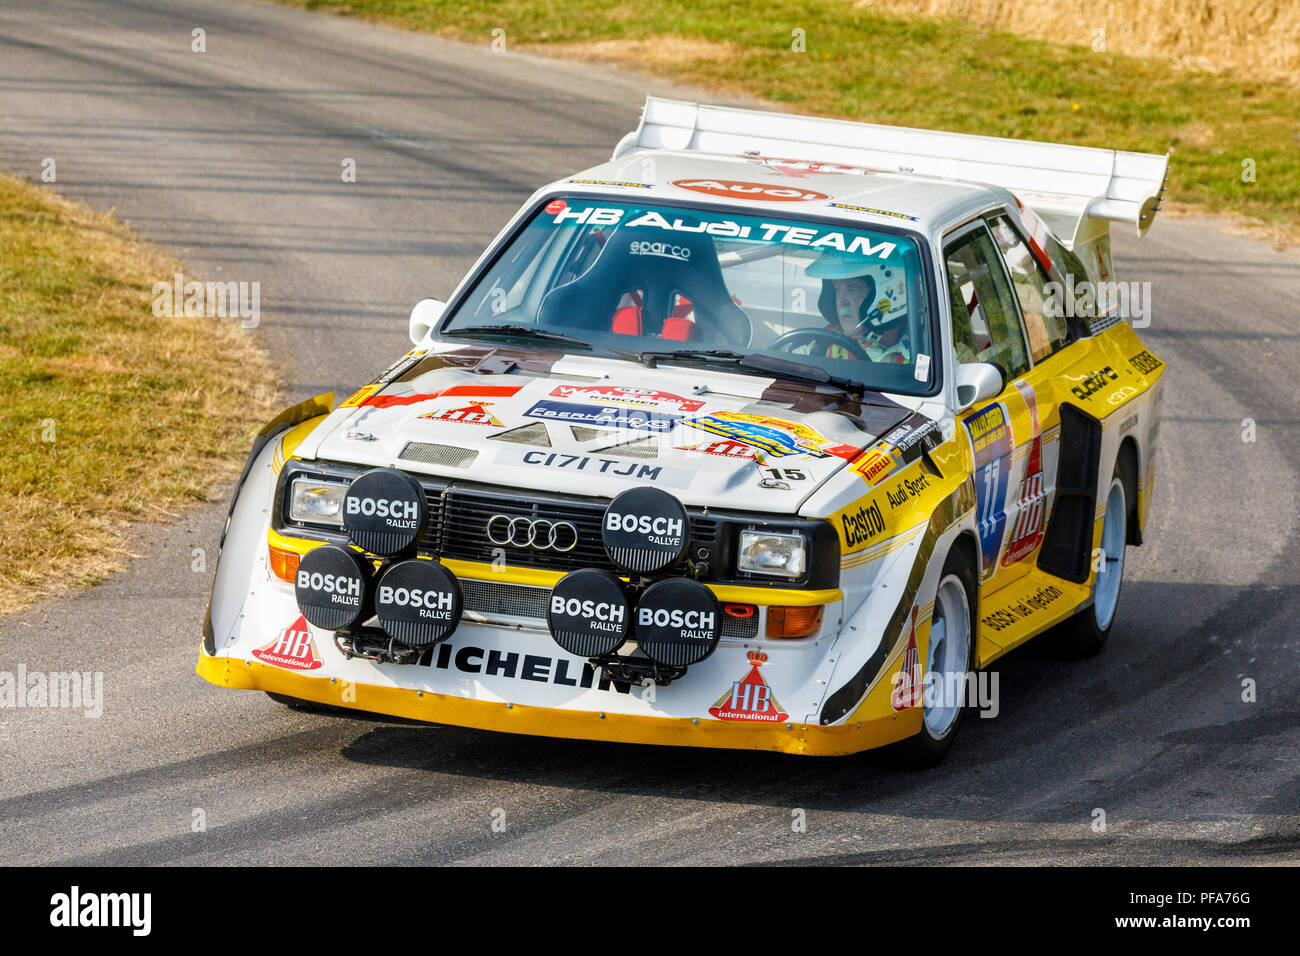 Audi sport quattro s1 -Fotos und -Bildmaterial in hoher Auflösung – Alamy